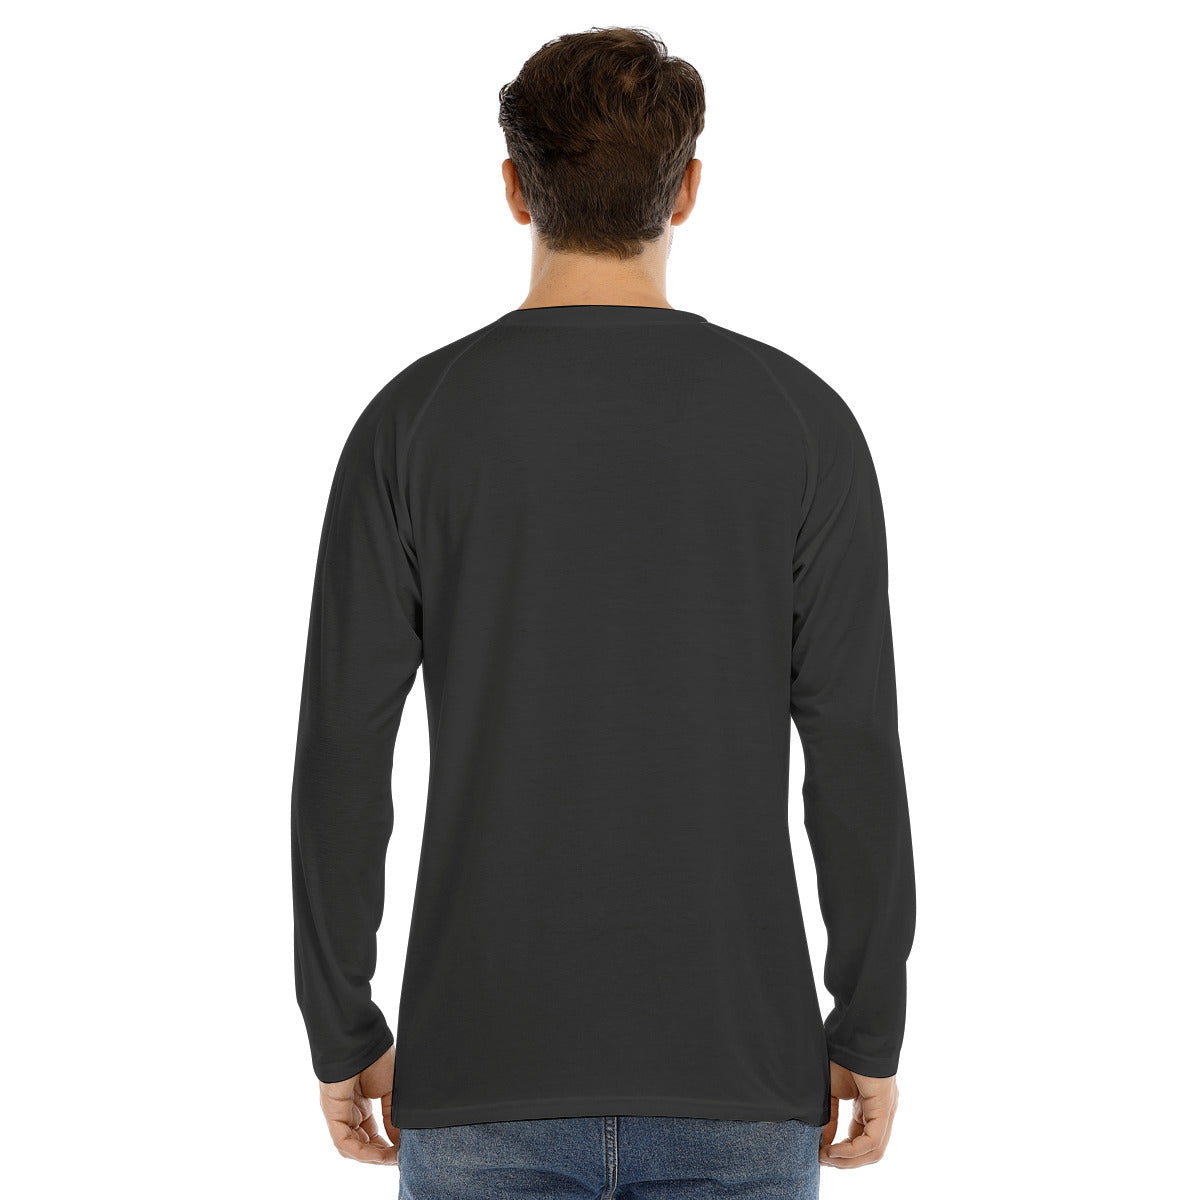 Survivor 103 -- Men's Long Sleeve T-shirt With Raglan Sleeve